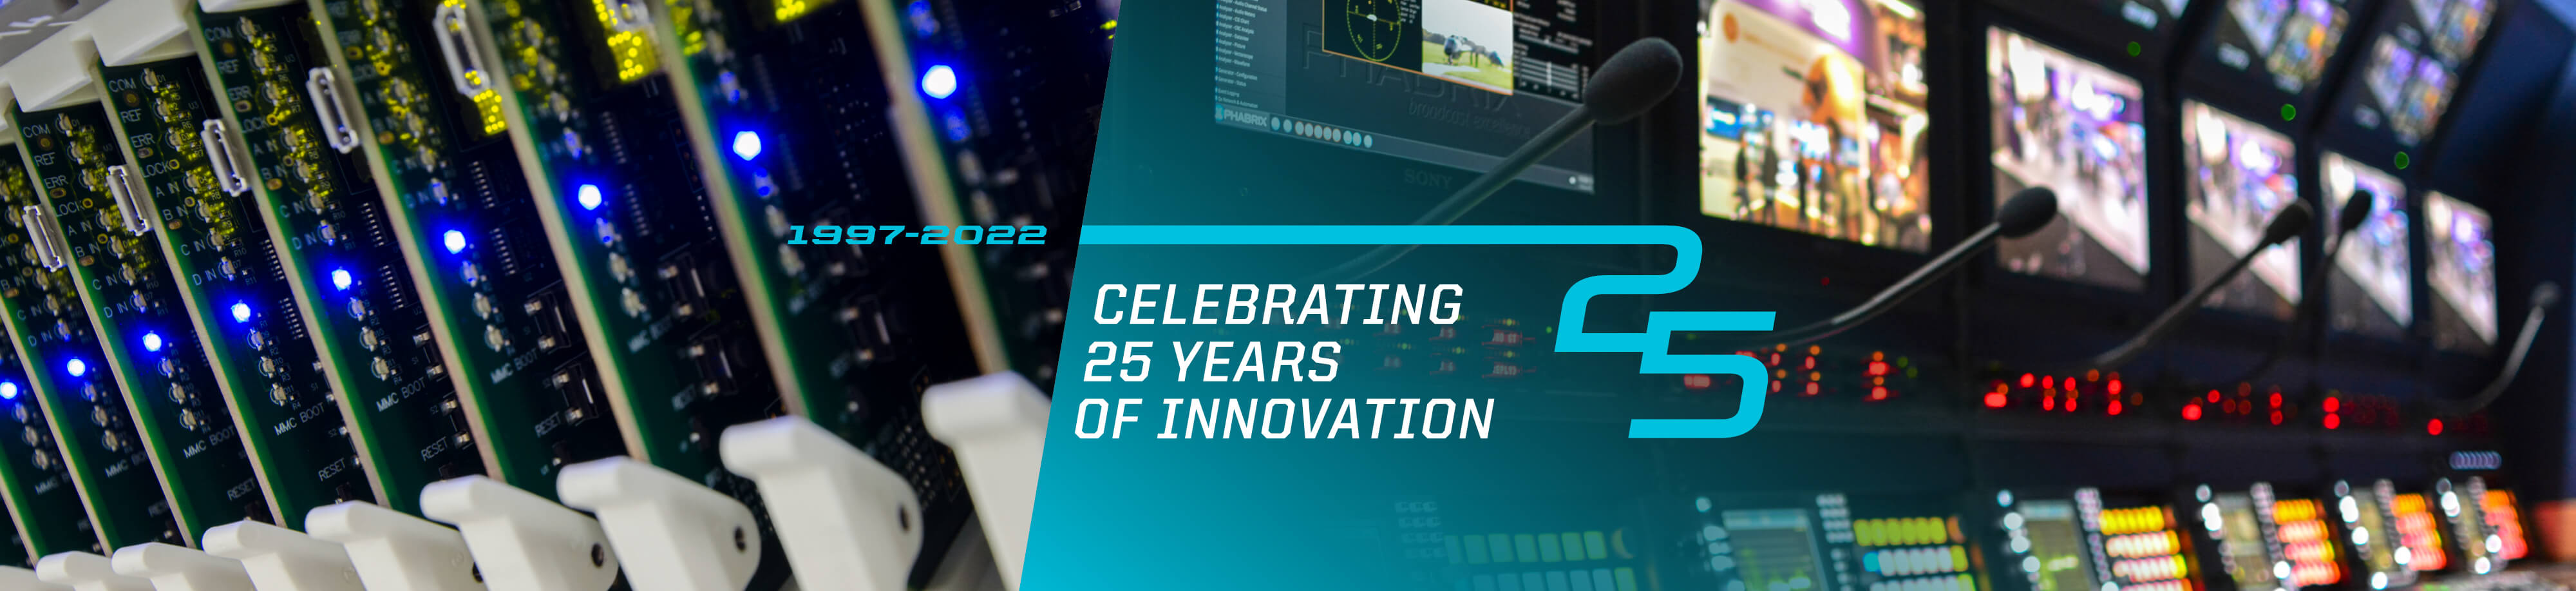 Celebrating 25 Years of Innovation.